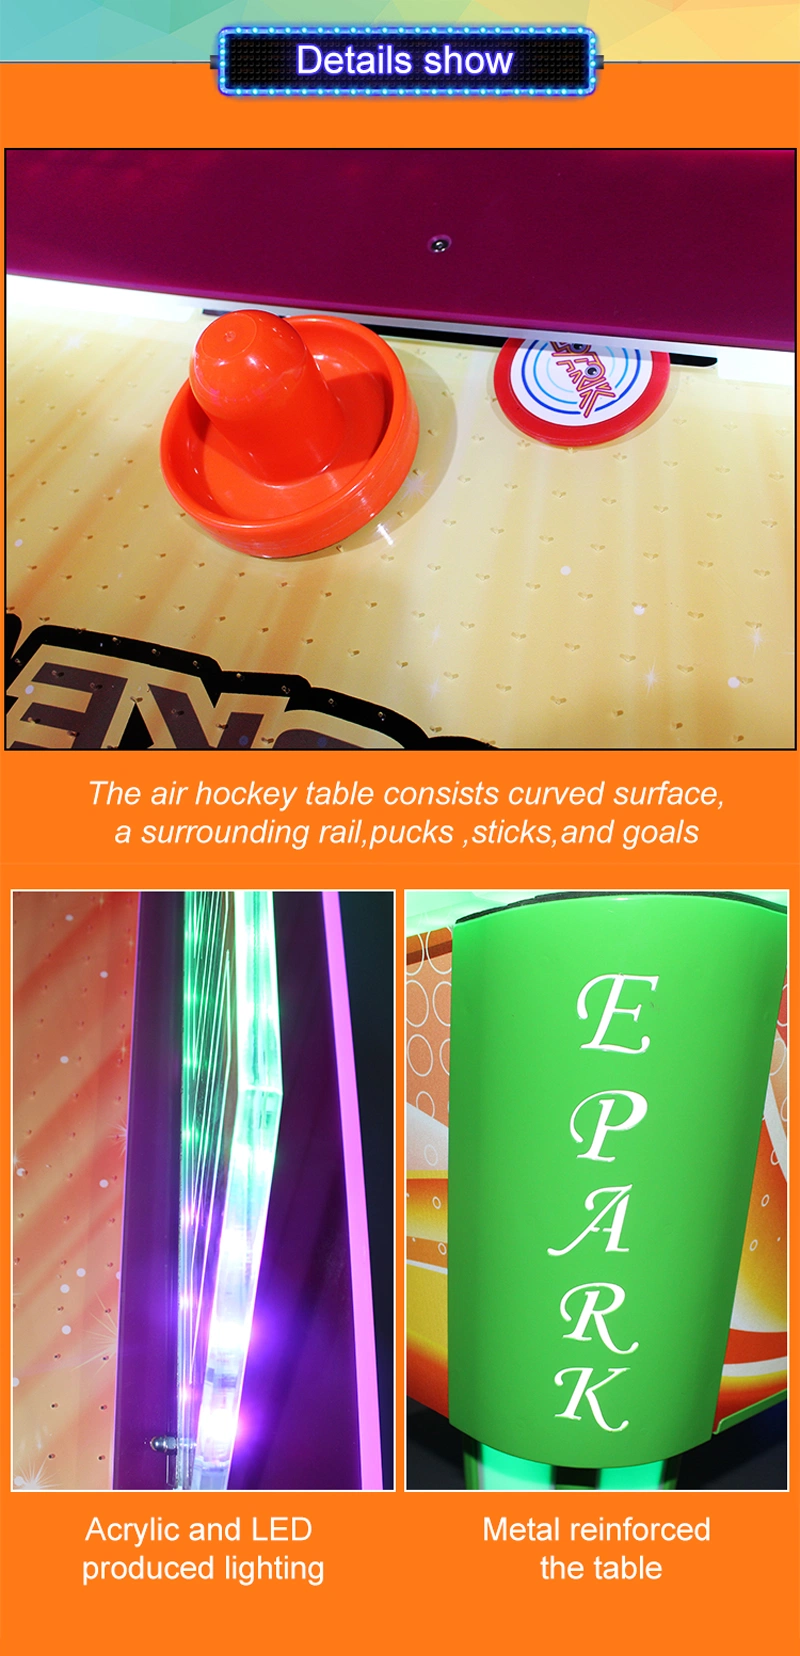 Arcade Coin Operated Game Machine Supplier Amusement Air Hockey Table